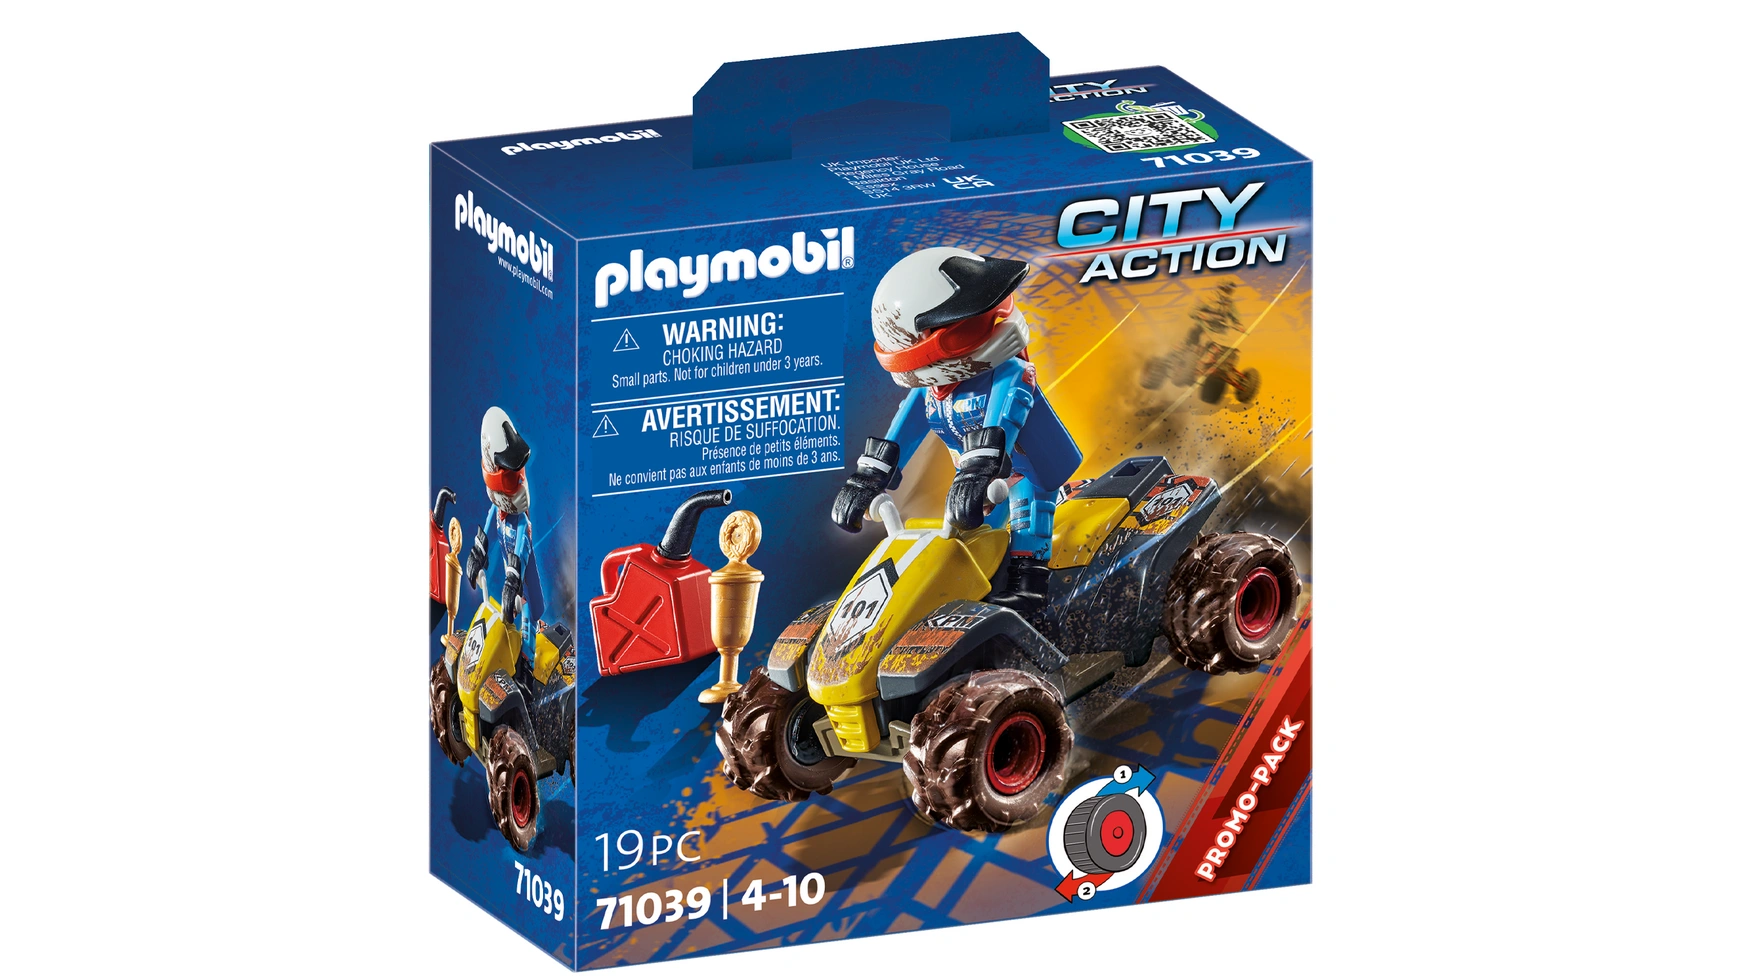 City action квадроцикл для бездорожья Playmobil фотографии